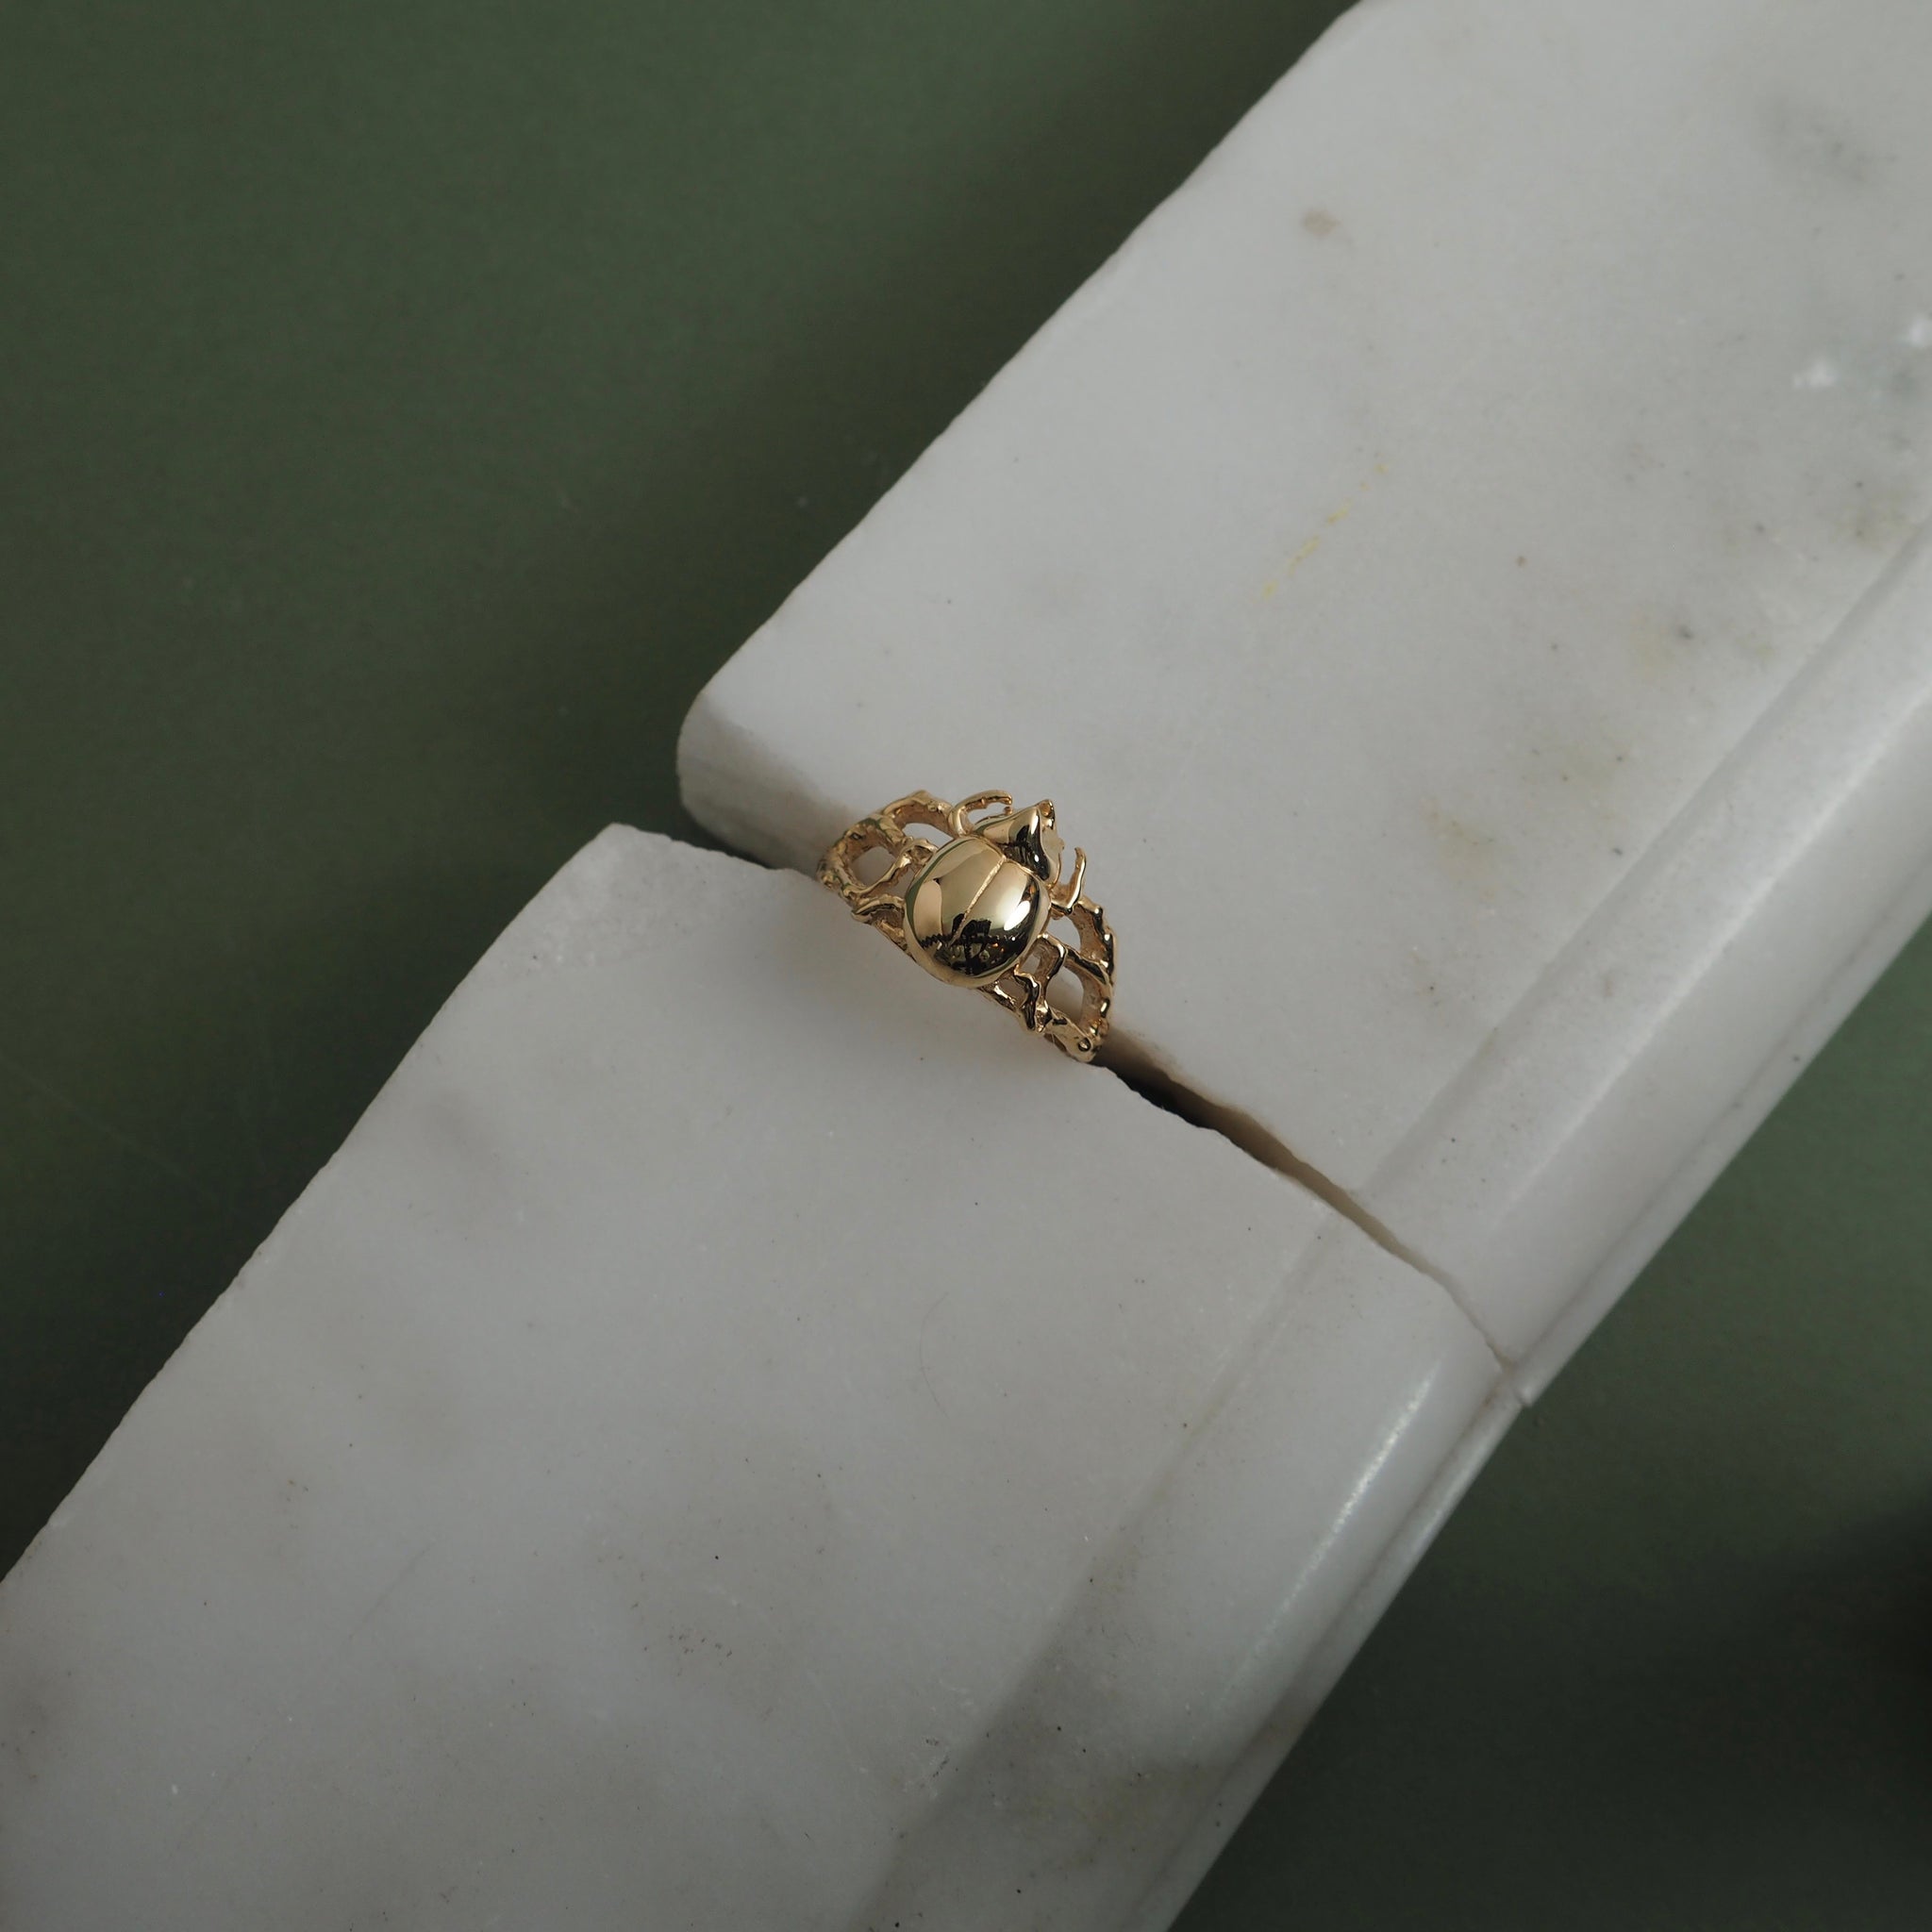 9ct Gold Little Rhino Beetle Ring by Yasmin Everley